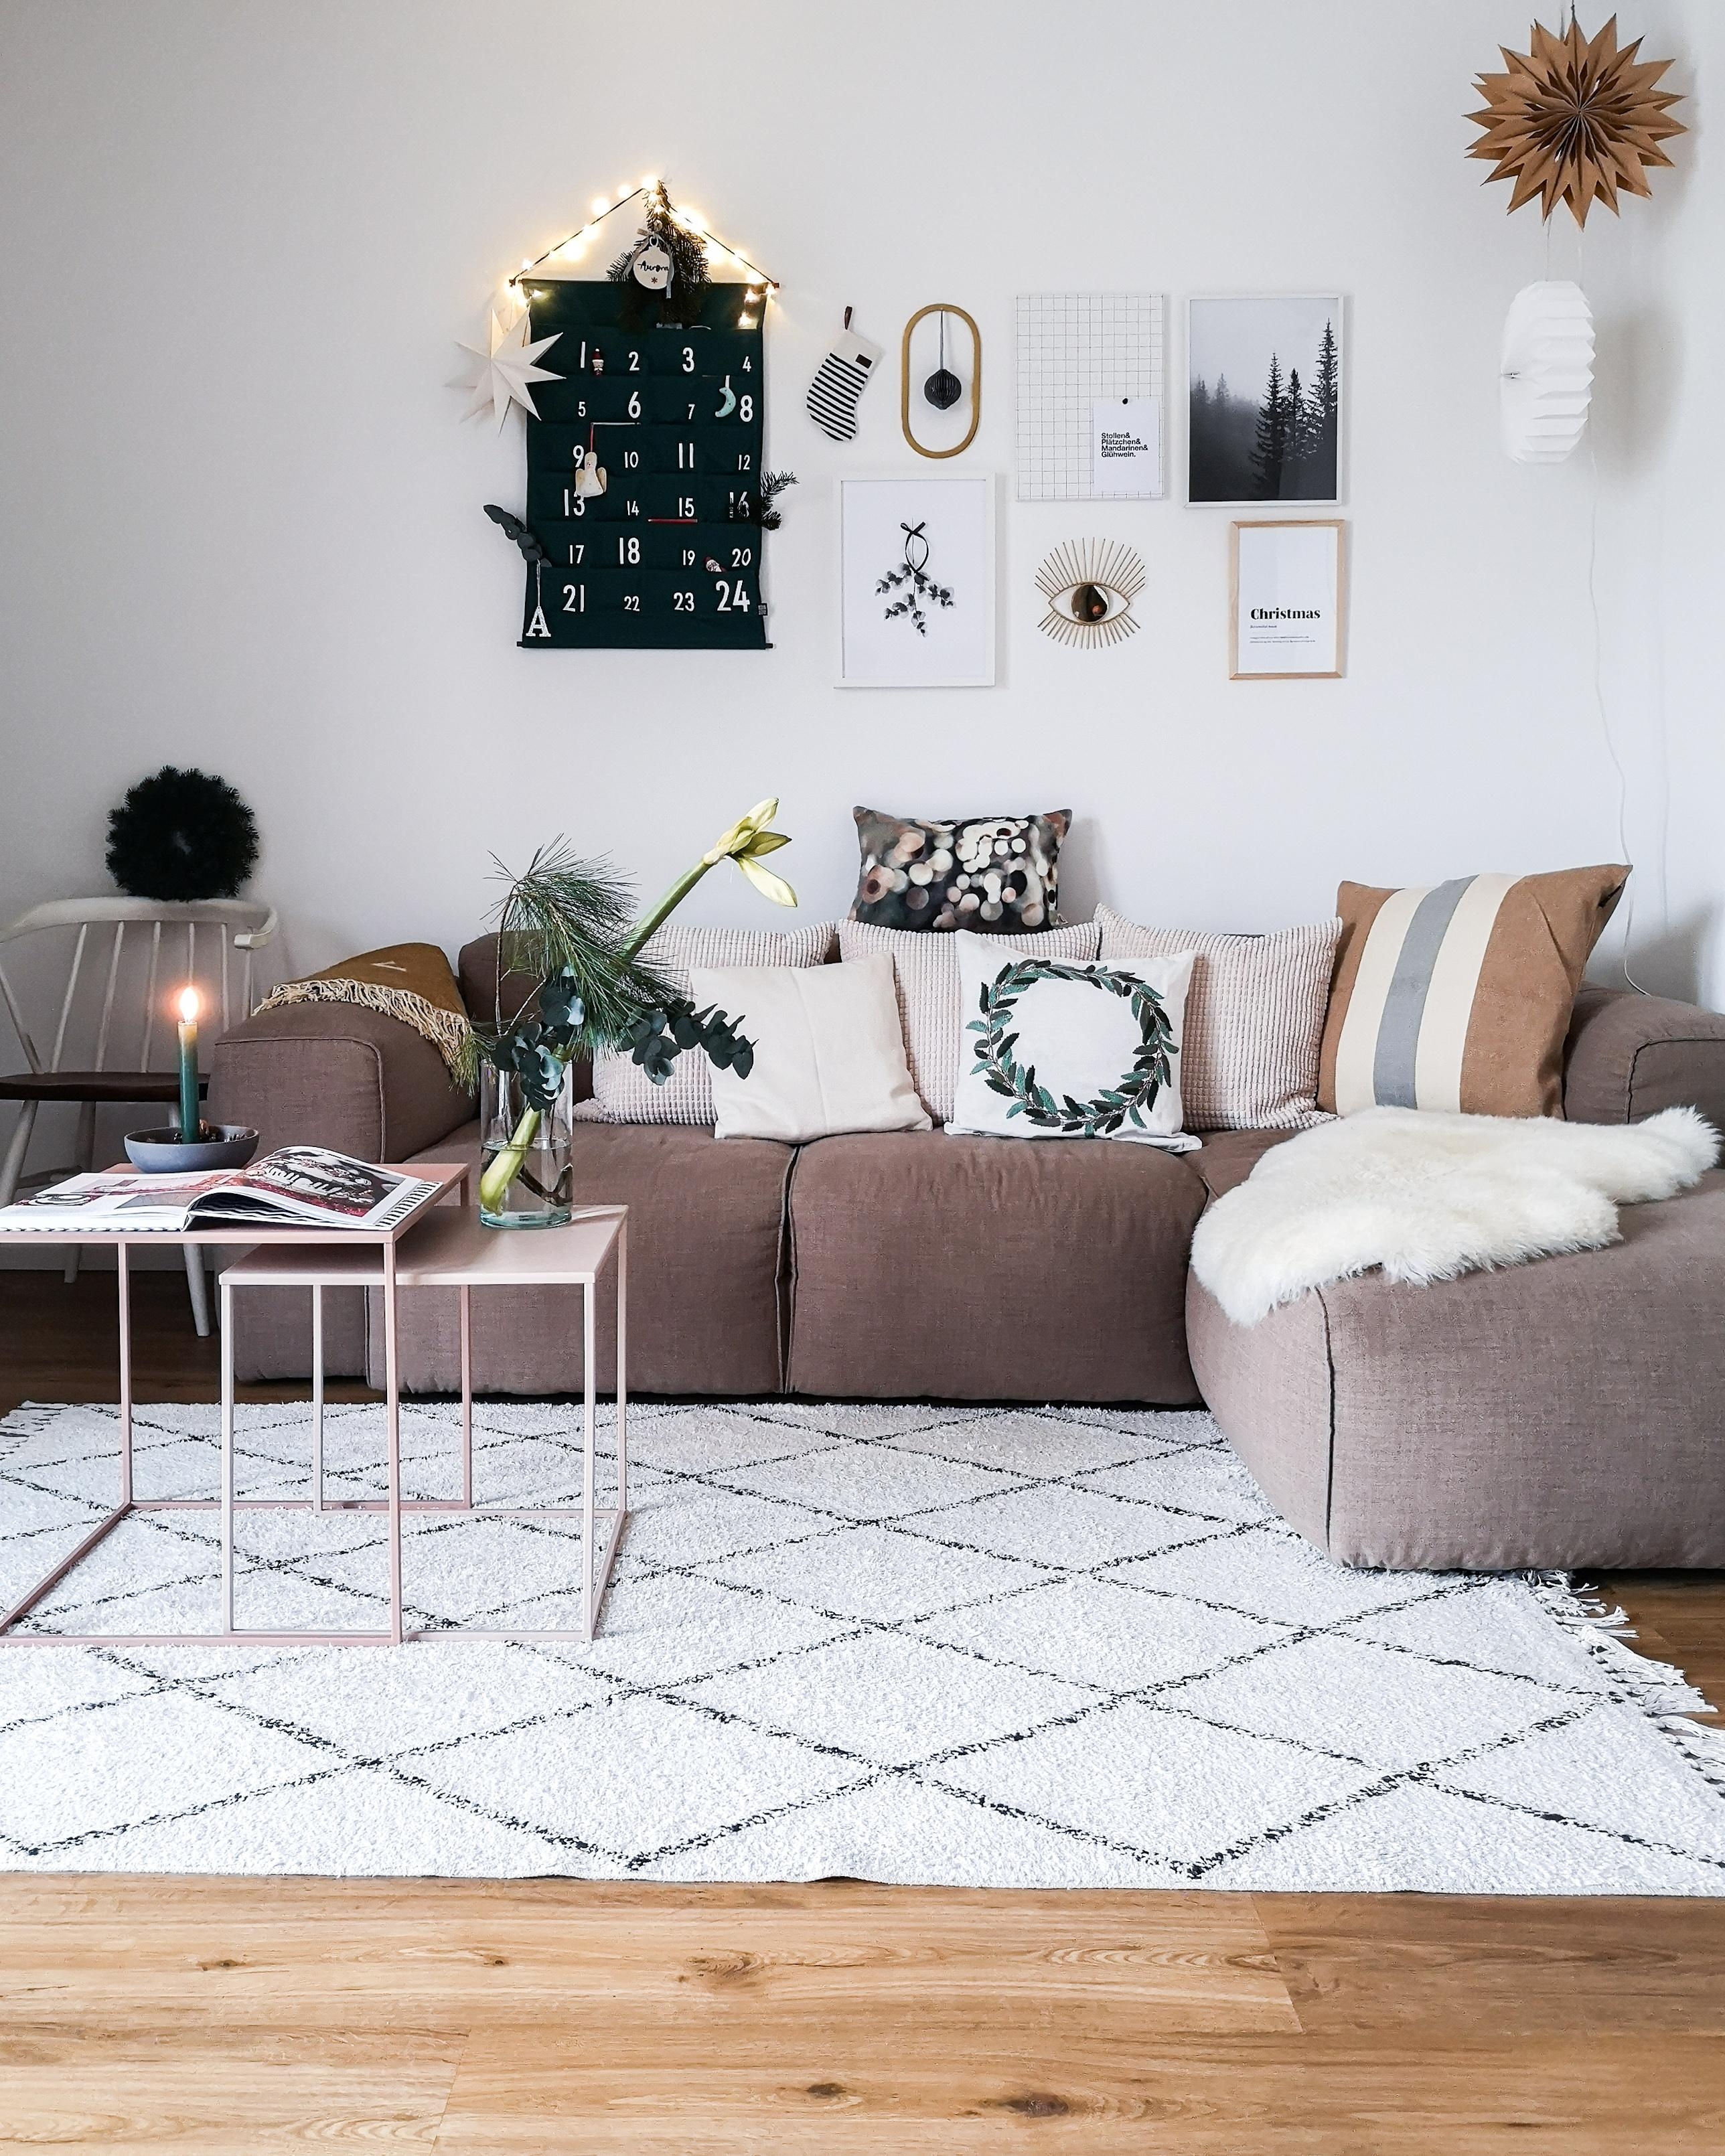 Scandi Christmas
#scandinaviandesign #sofa #couch #christmasdecoration #scandichristmas #whiteliving #gallarywall 